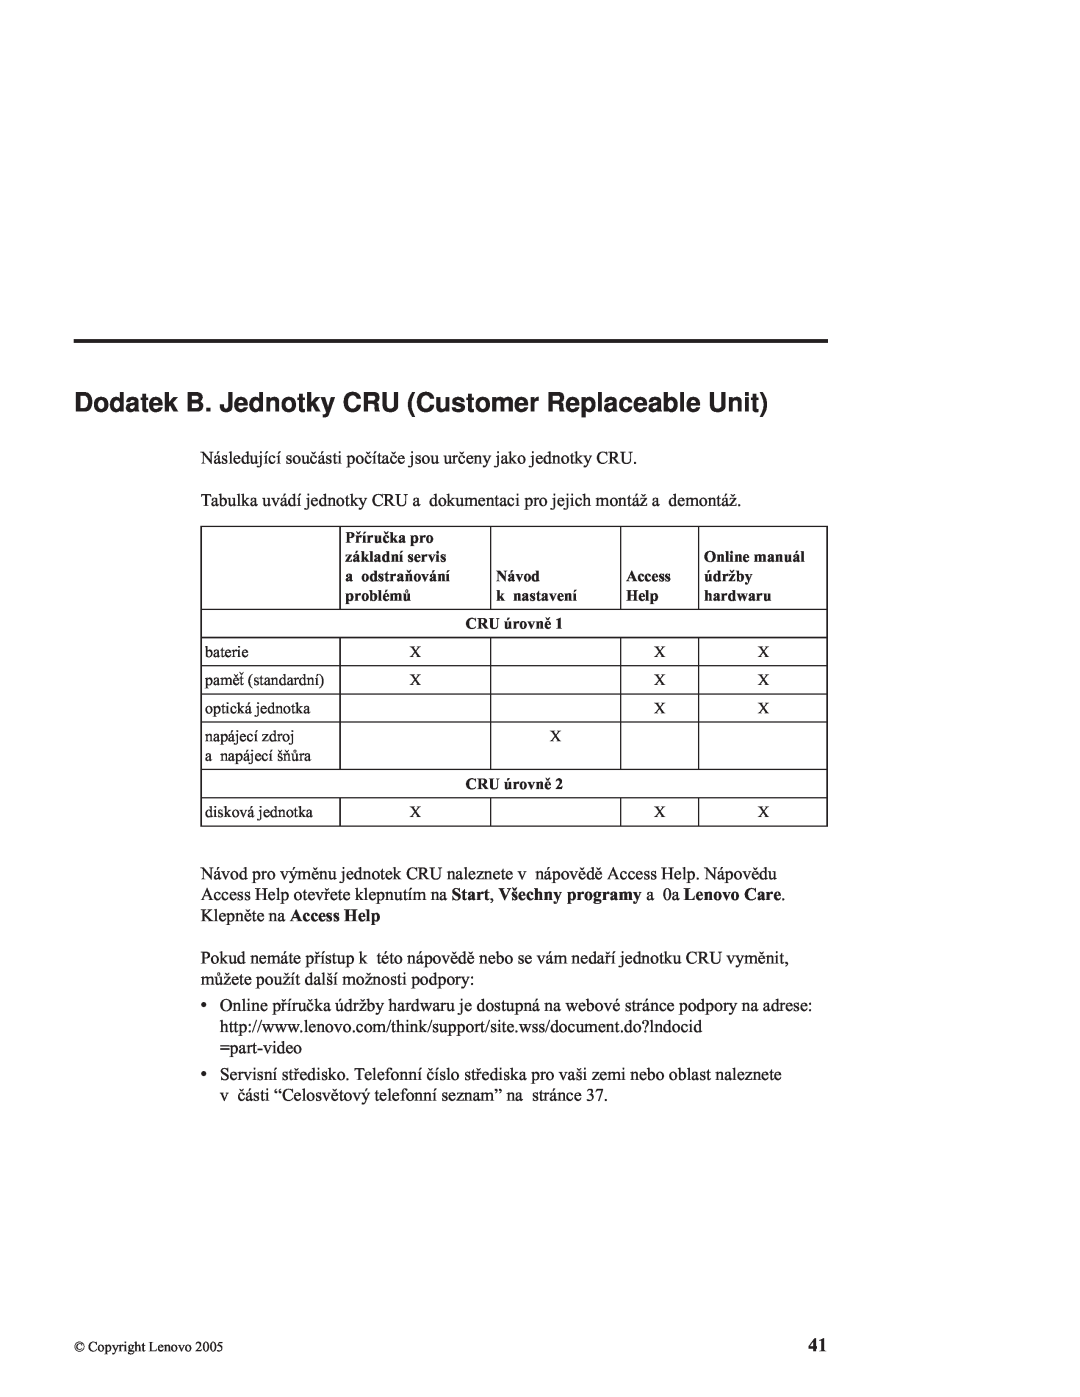 Lenovo C100 manual Dodatek B. Jednotky CRU Customer Replaceable Unit 